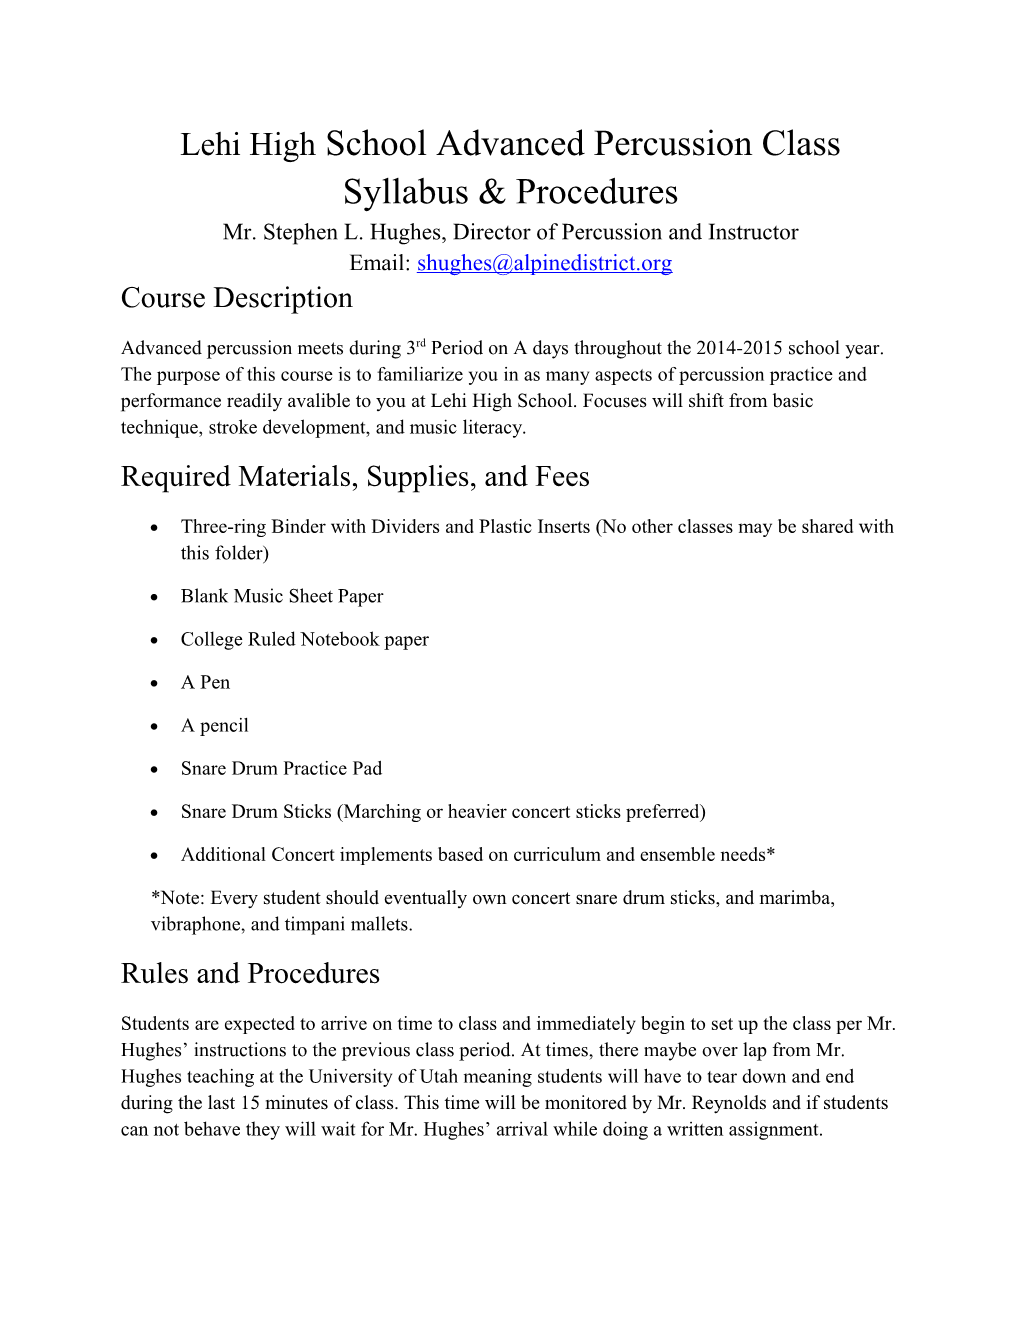 Lehi Highschool Advanced Percussion Class Syllabus & Procedures